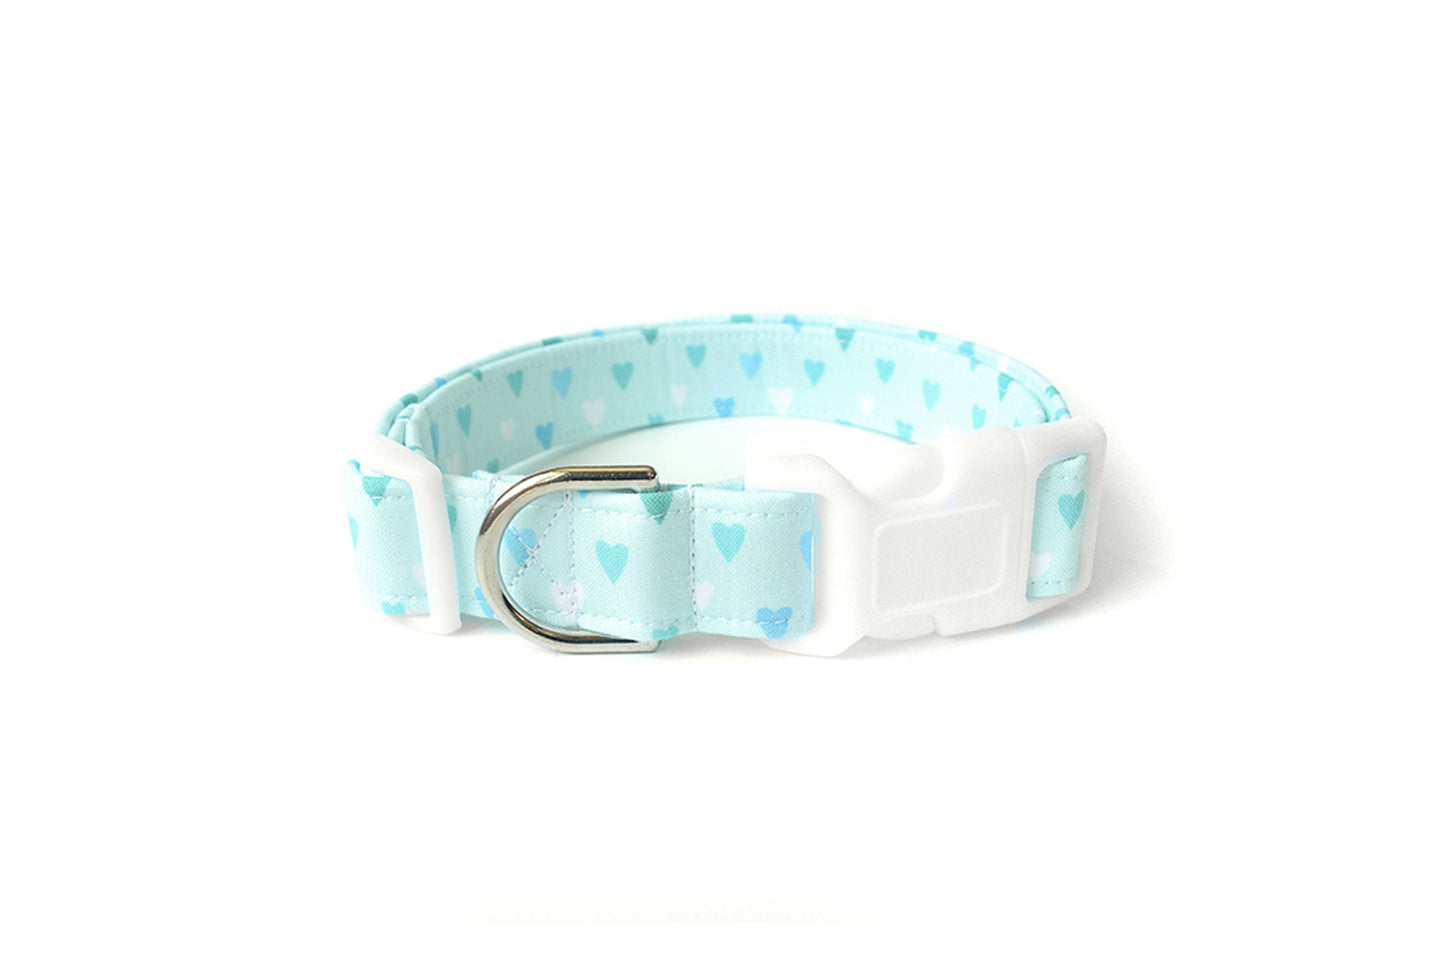 Pastel Sky Blue Hearts Dog Collar - Handmade by Kira's Pet Shop